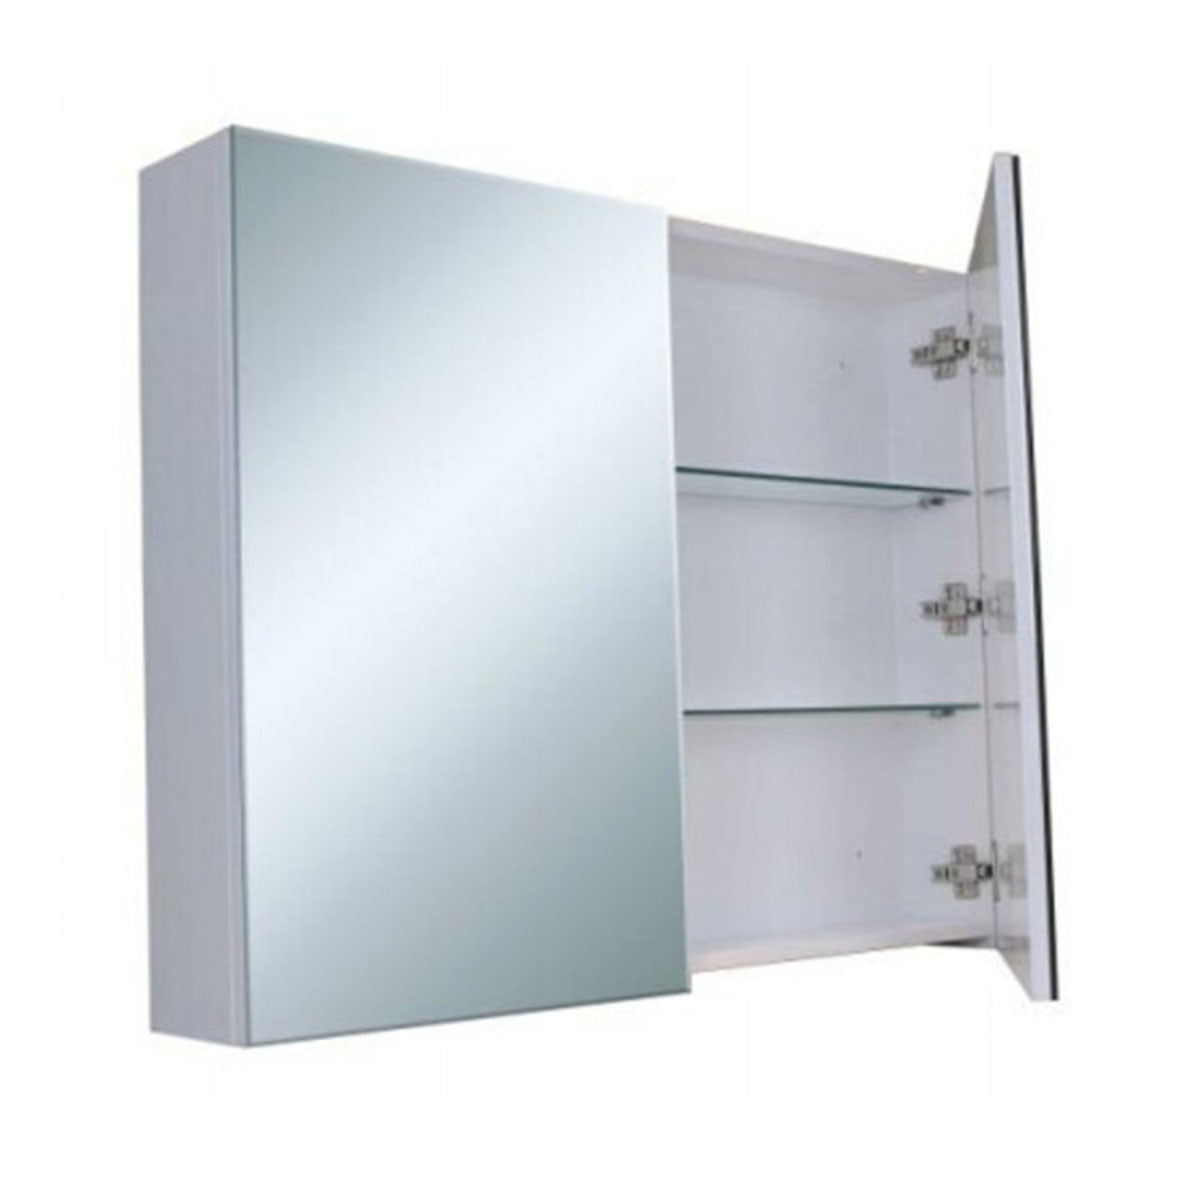 Granlusso 2 Soft Close Door Mirror Storage Cabinet Wall Hung